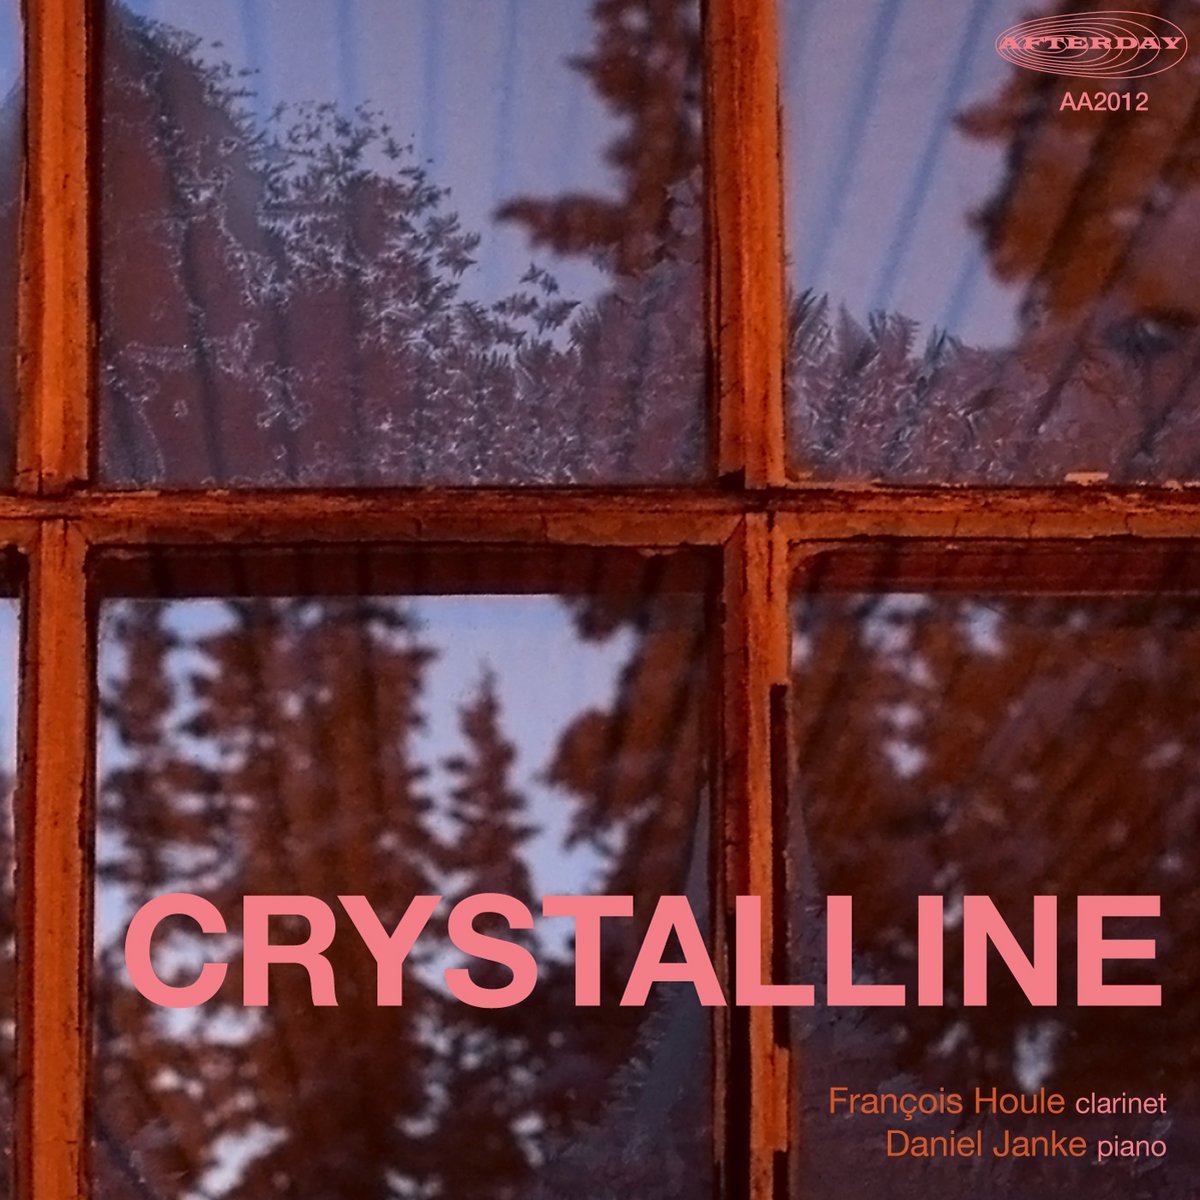 Daniel Janke album 'Crystalline'